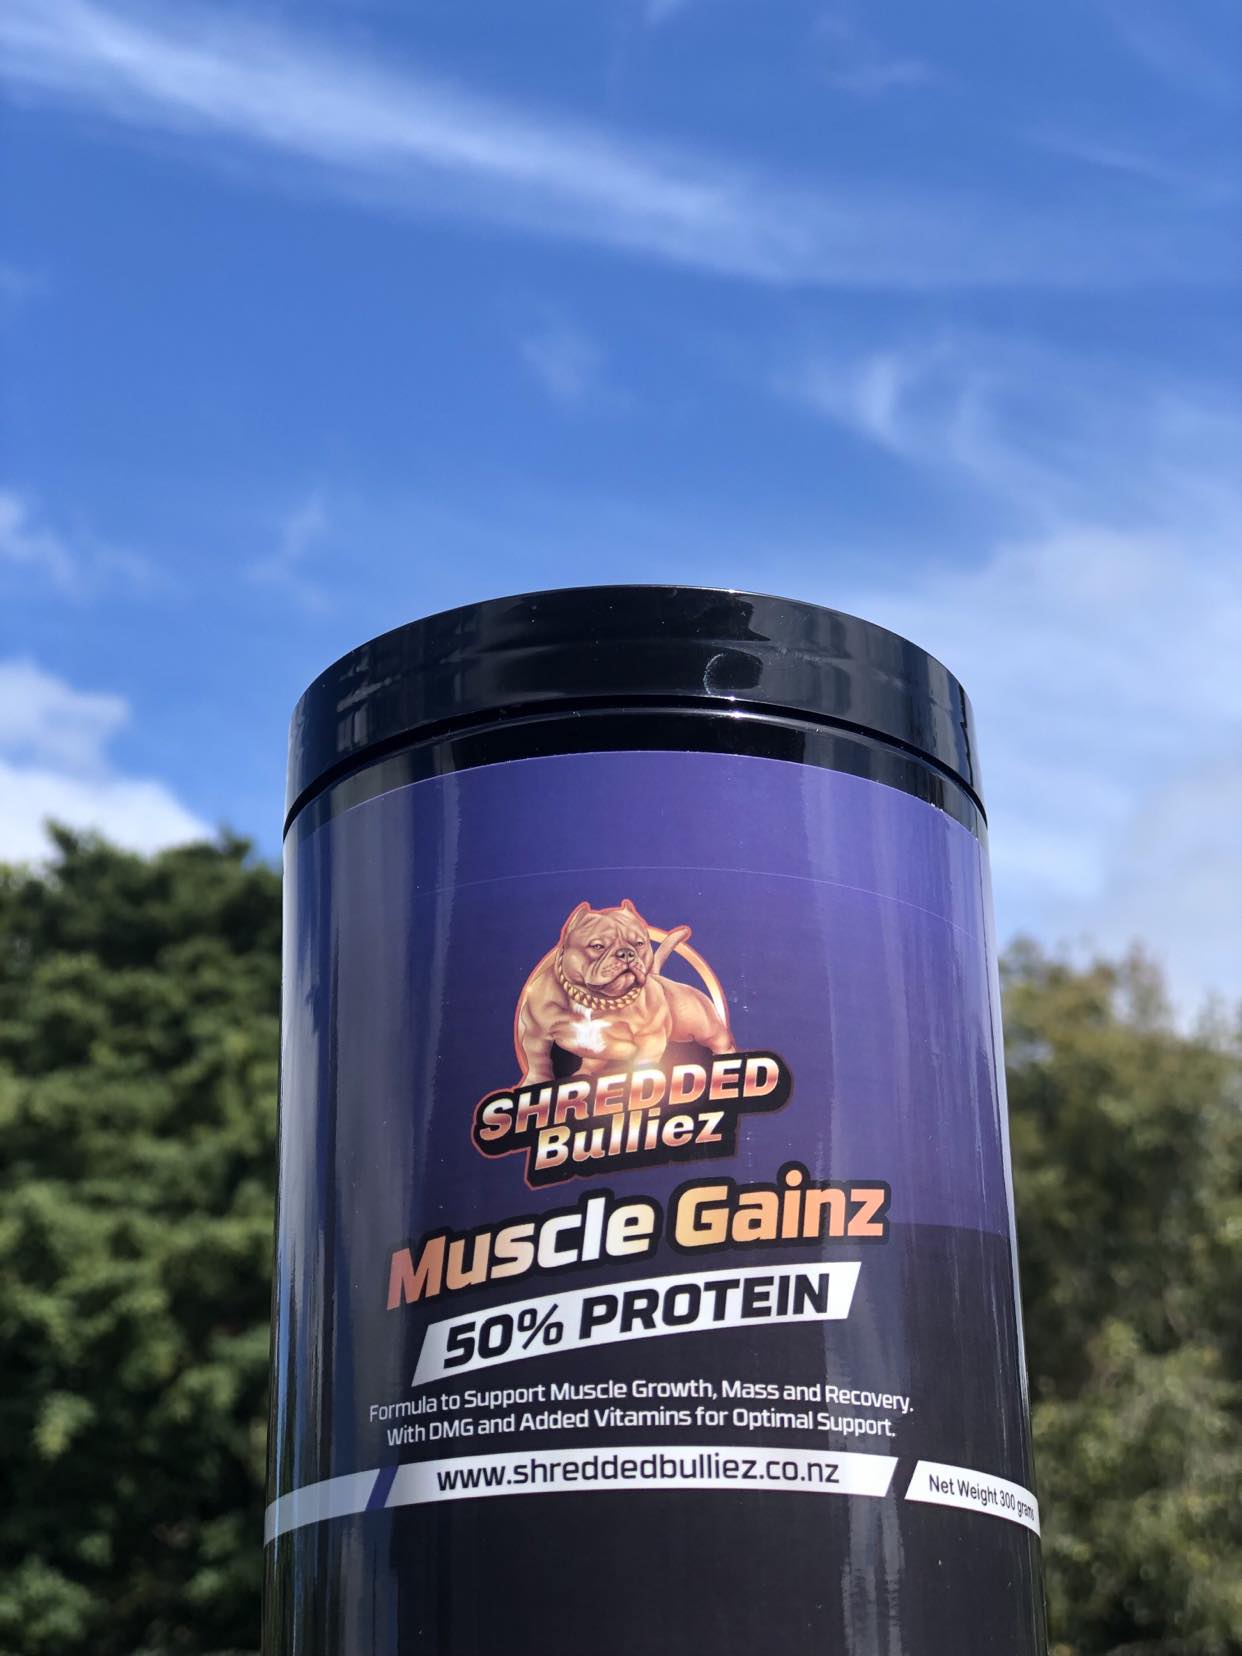 Muscle Gainz I Protein Supplement - Shredded Bulliez